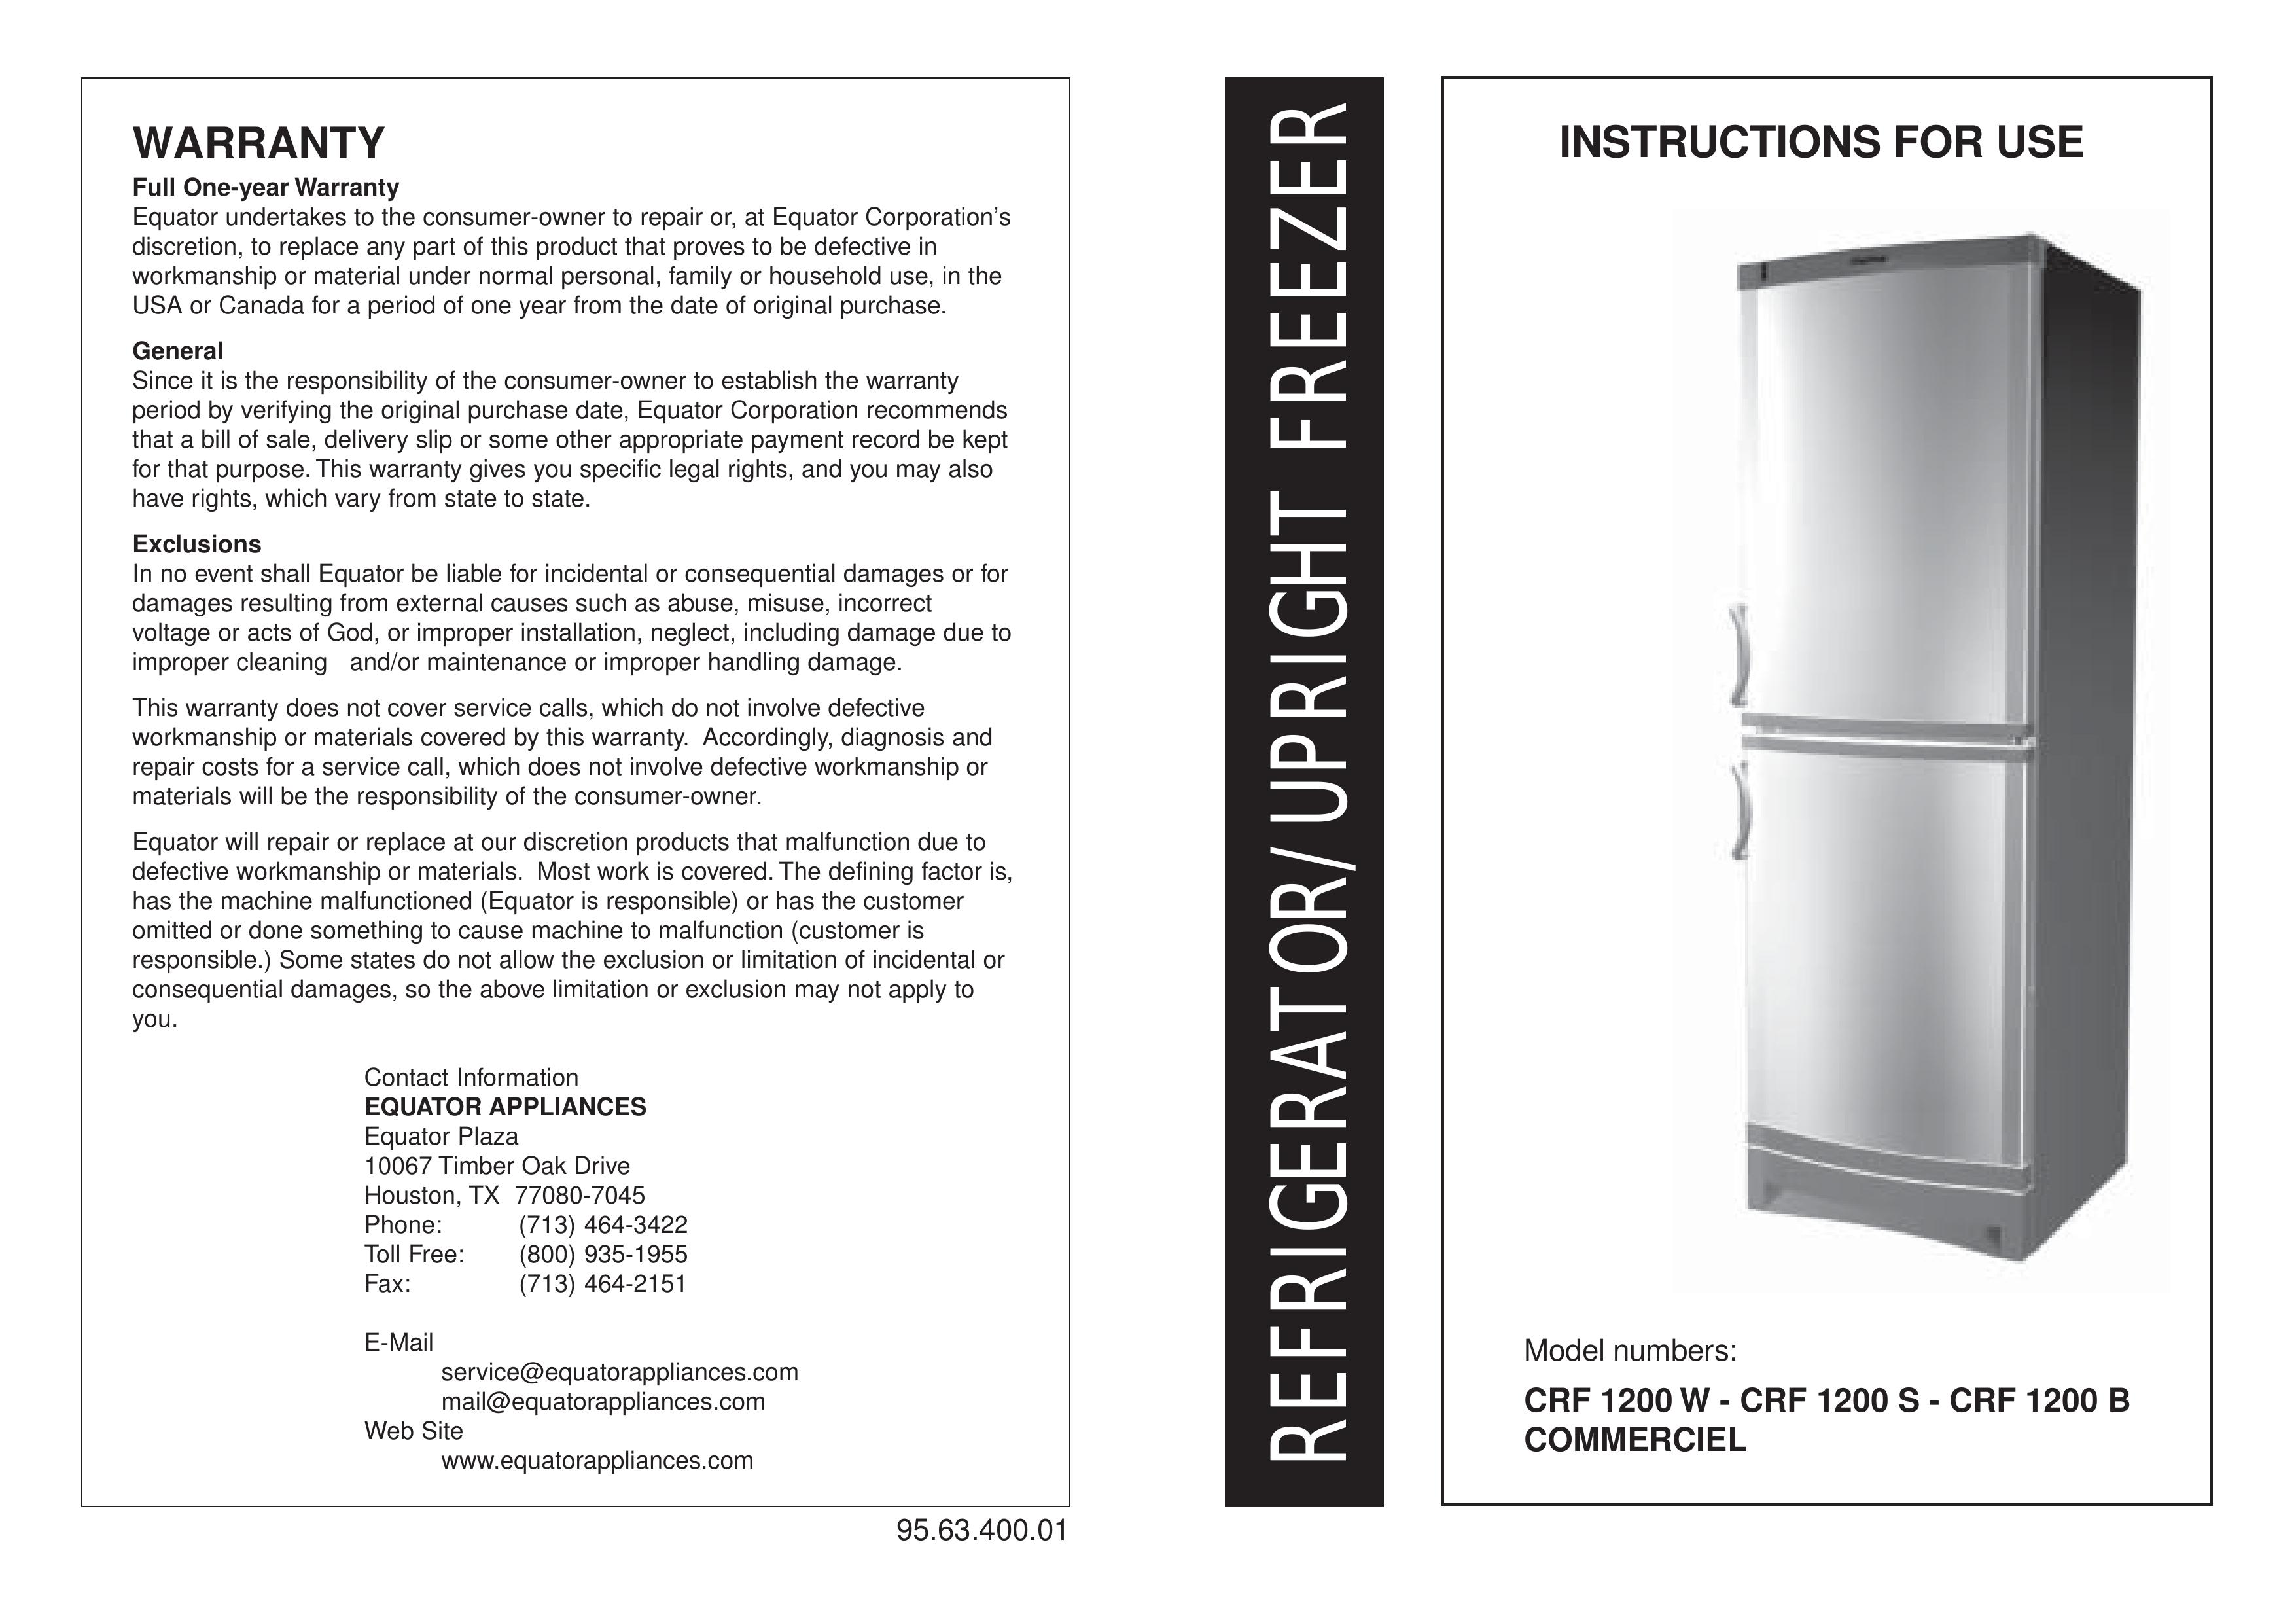 Equator CRF 1200 W Refrigerator User Manual